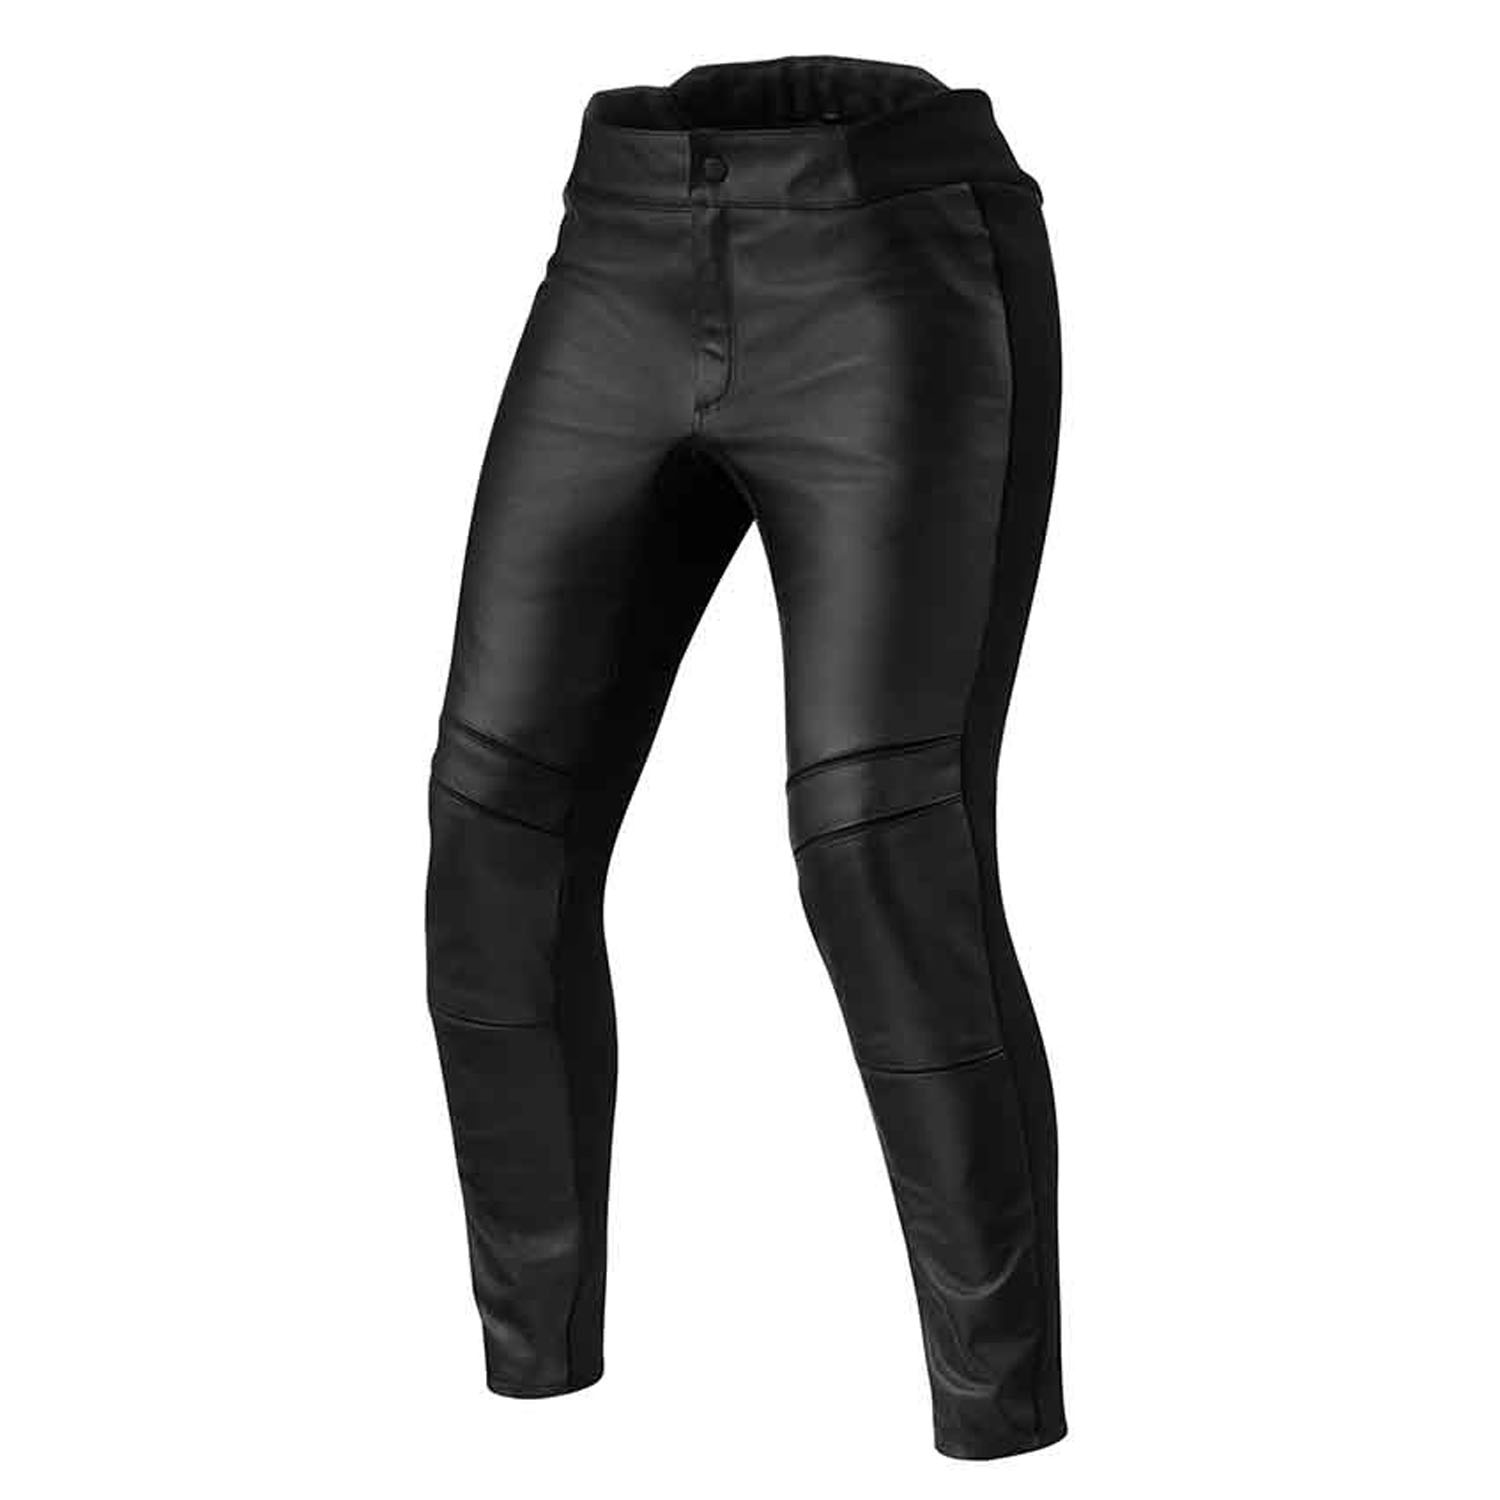 REV'IT! Maci Ladies Black Short Motorcycle Pants Size 38